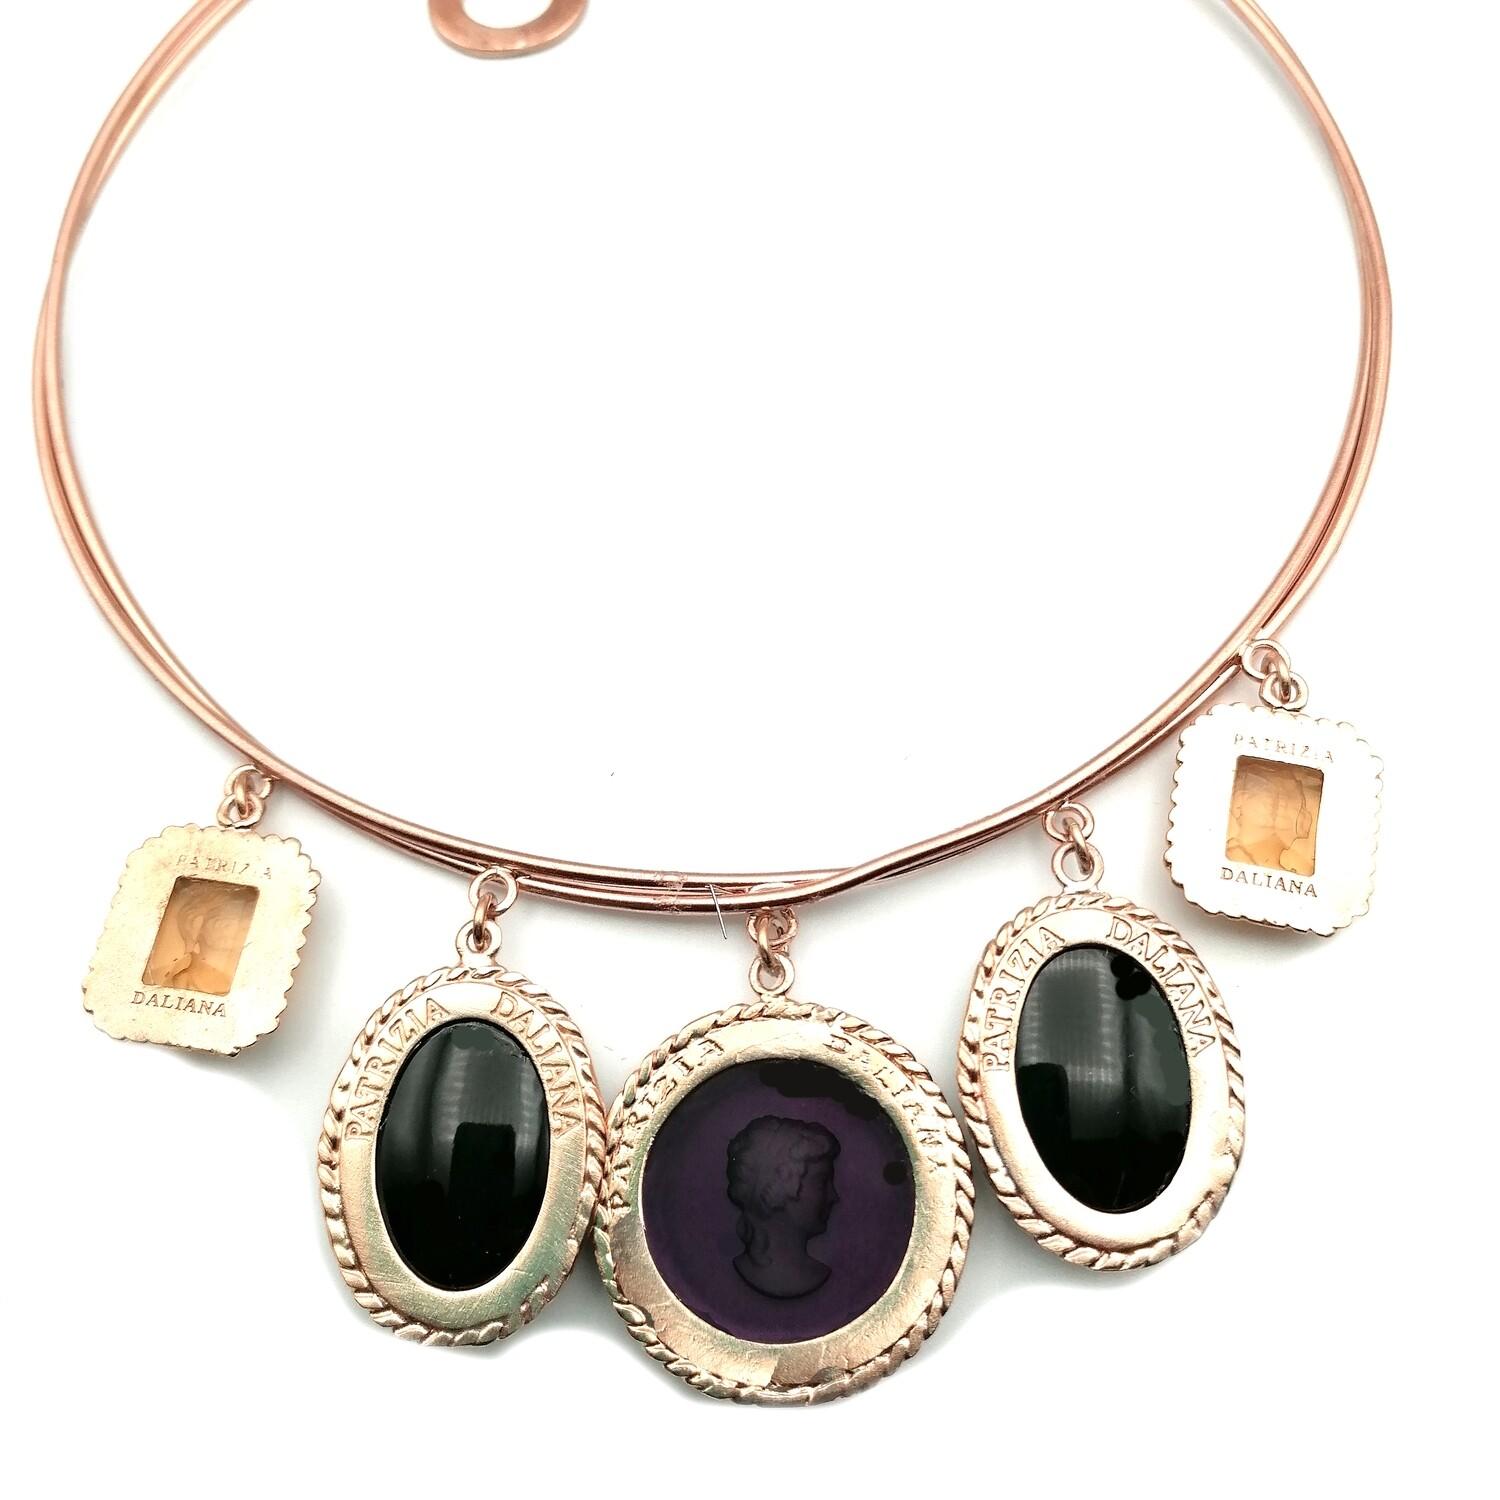 Women's Pure Bronze and Murano Glass Choker  Necklace, by Patrizia Daliana For Sale